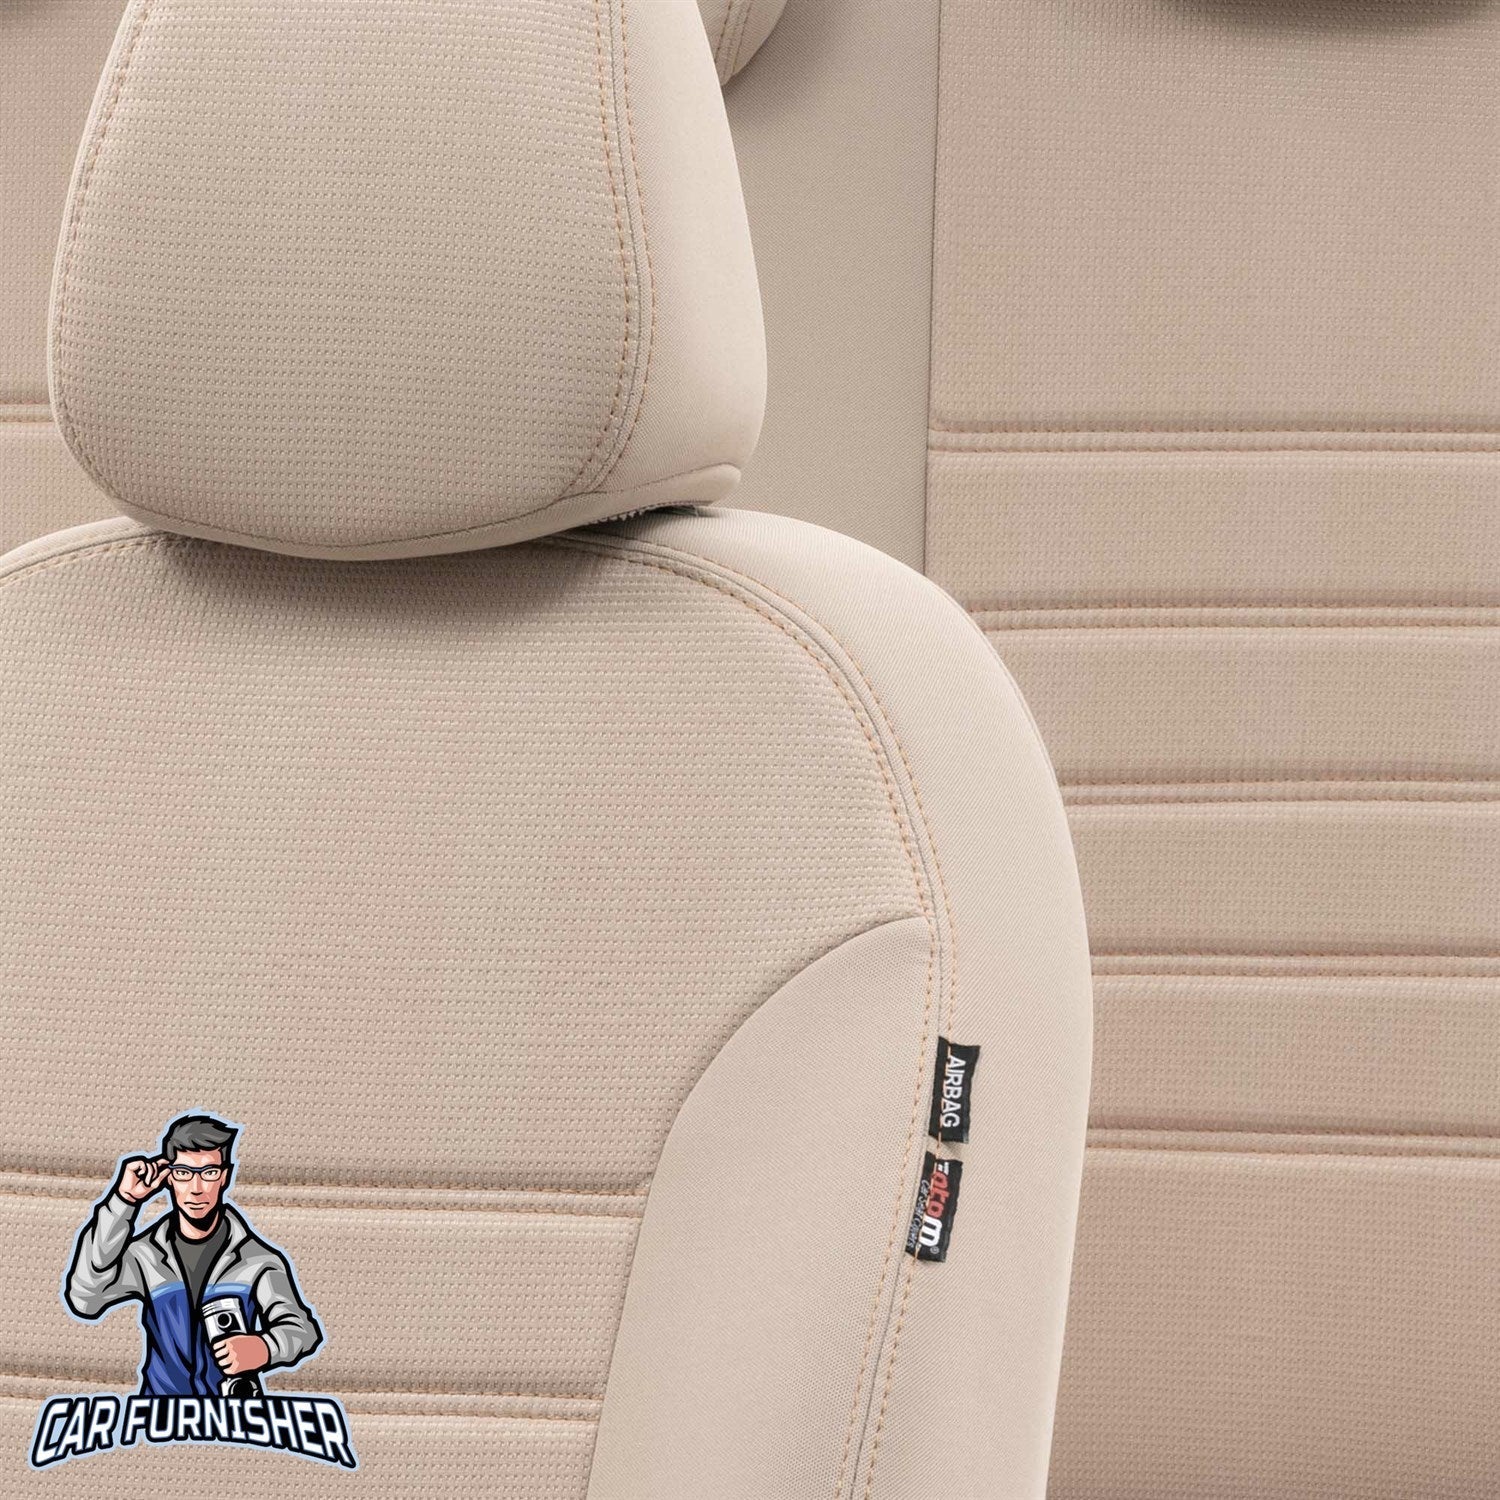 Fiat Bravo Seat Covers Original Jacquard Design Beige Jacquard Fabric